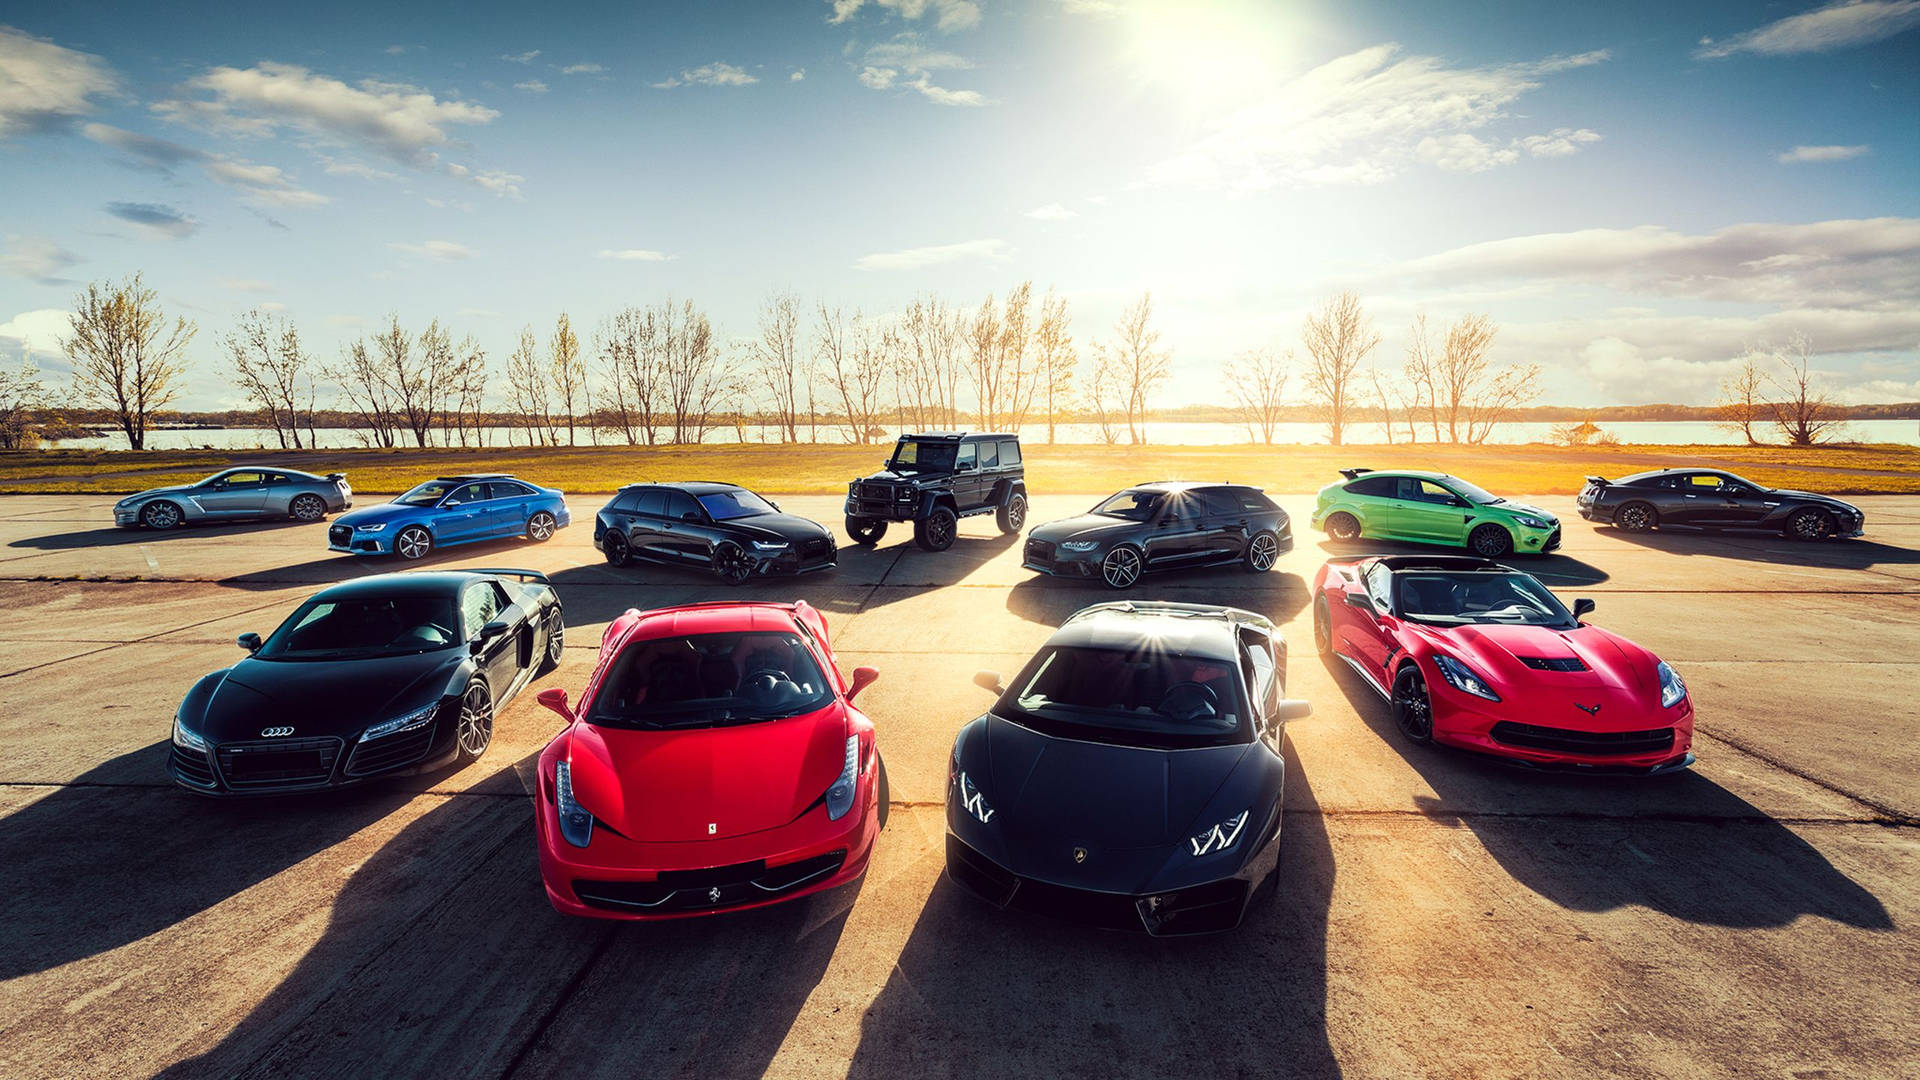 Luxury Supercar Models